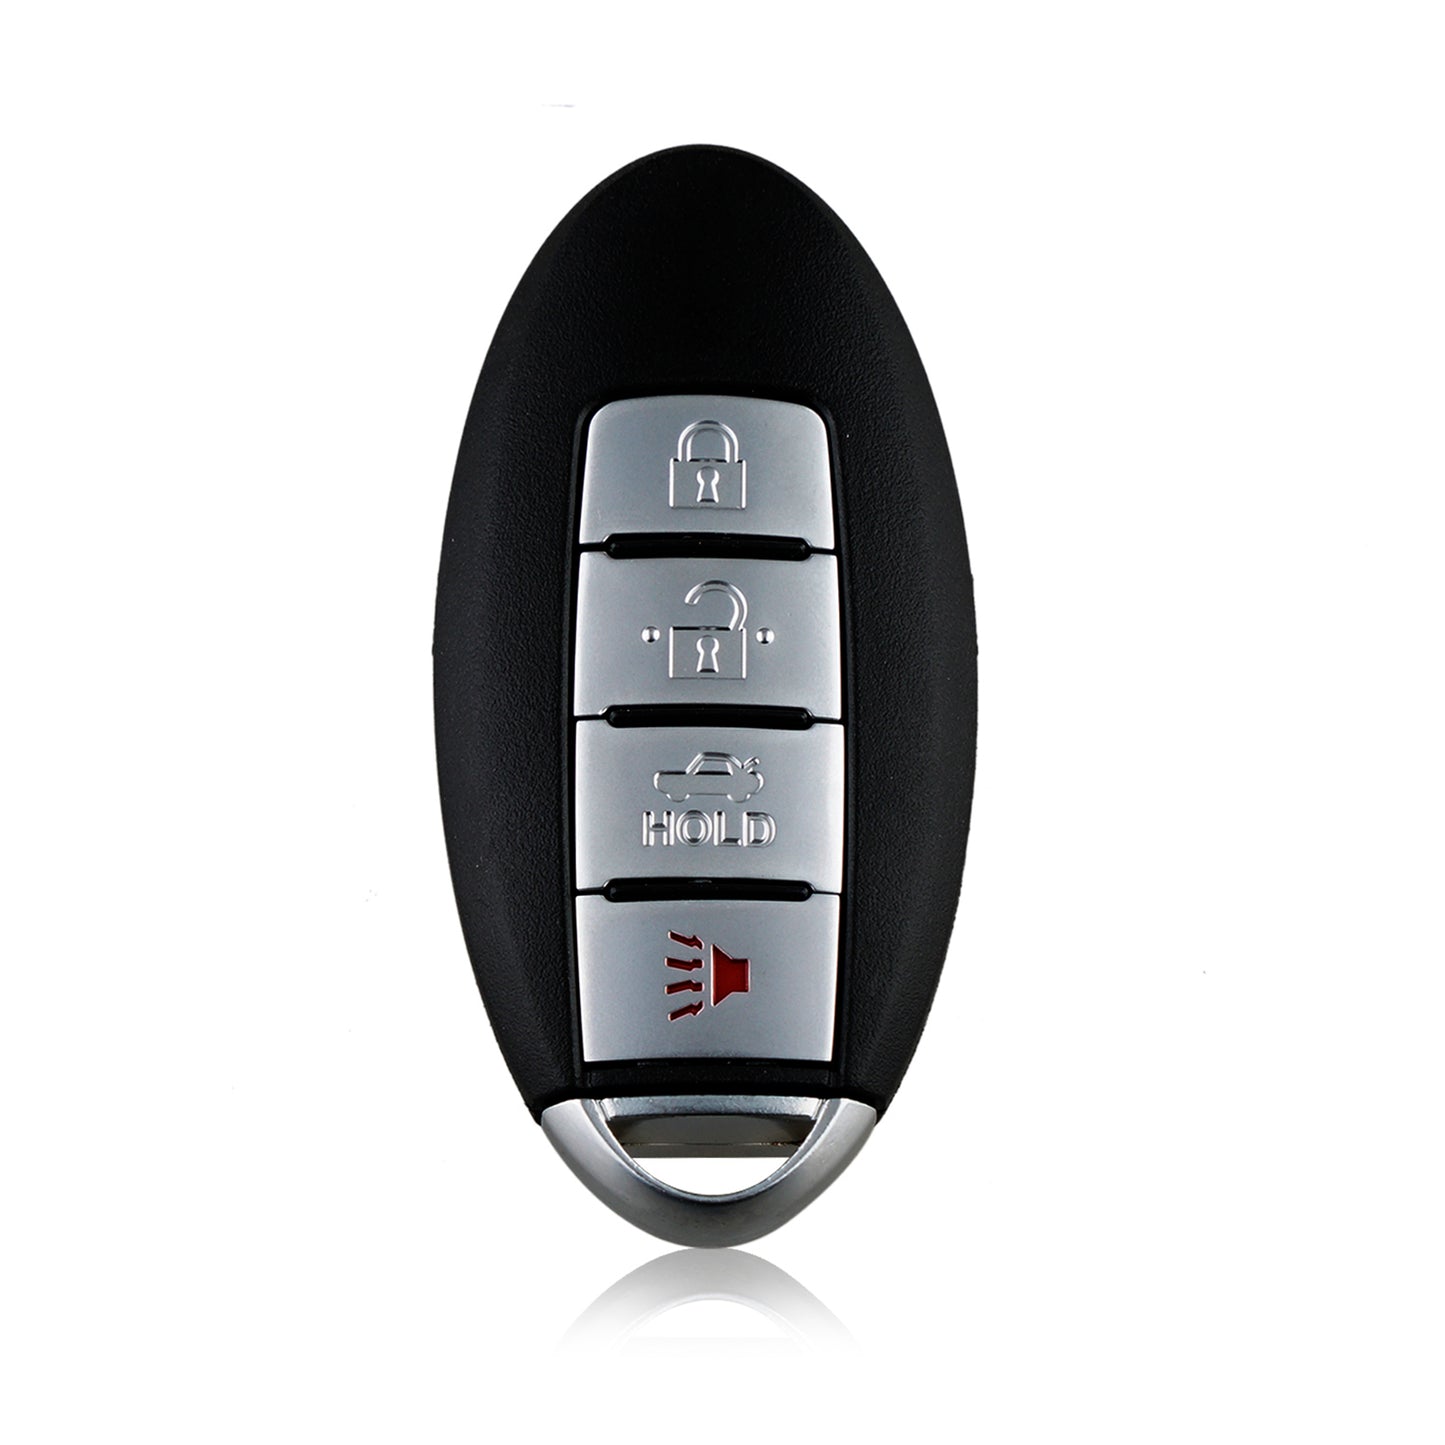 4 Buttons 433MHz Keyless Entry Fob Remote Car Key For 2007-2015 Nissan Versa Murano 370Z Infiniti EX35 G35 G37 G25 Q40 Q60 QX70 FX37  FCC ID:  KR55WK48903 KR55WK49622 SKU : J084